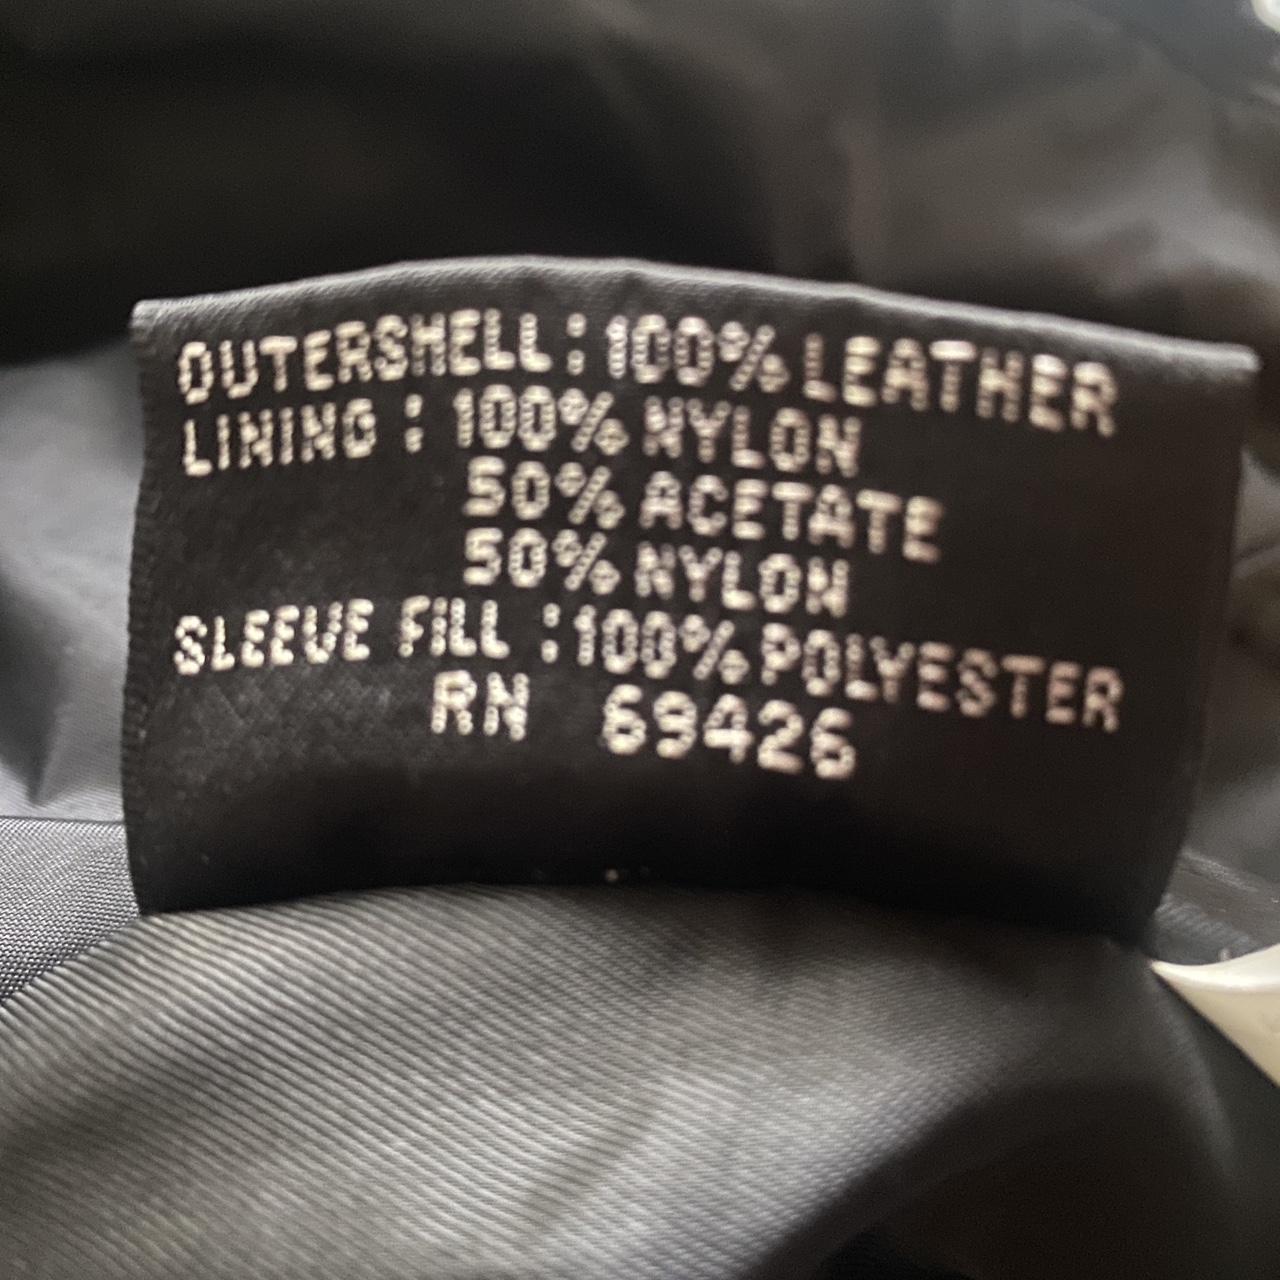 Wilson’s Leather Men's Black Jacket (3)